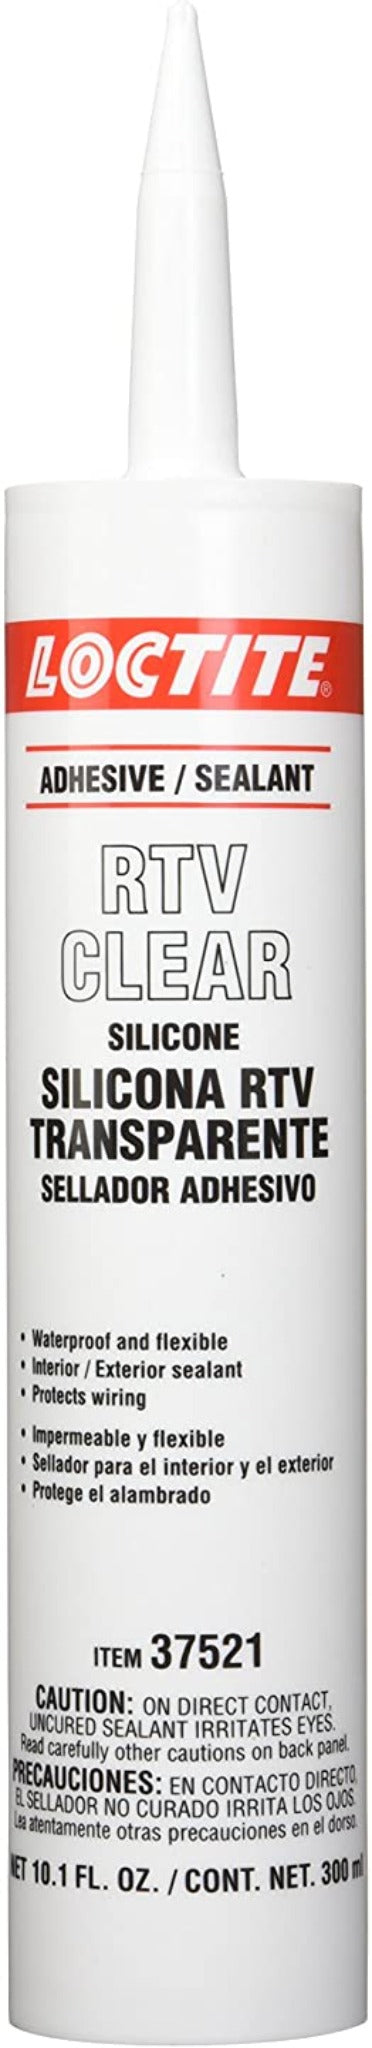 Loctite RTV Clear Silicone Adhesive/Sealant, 300 ml